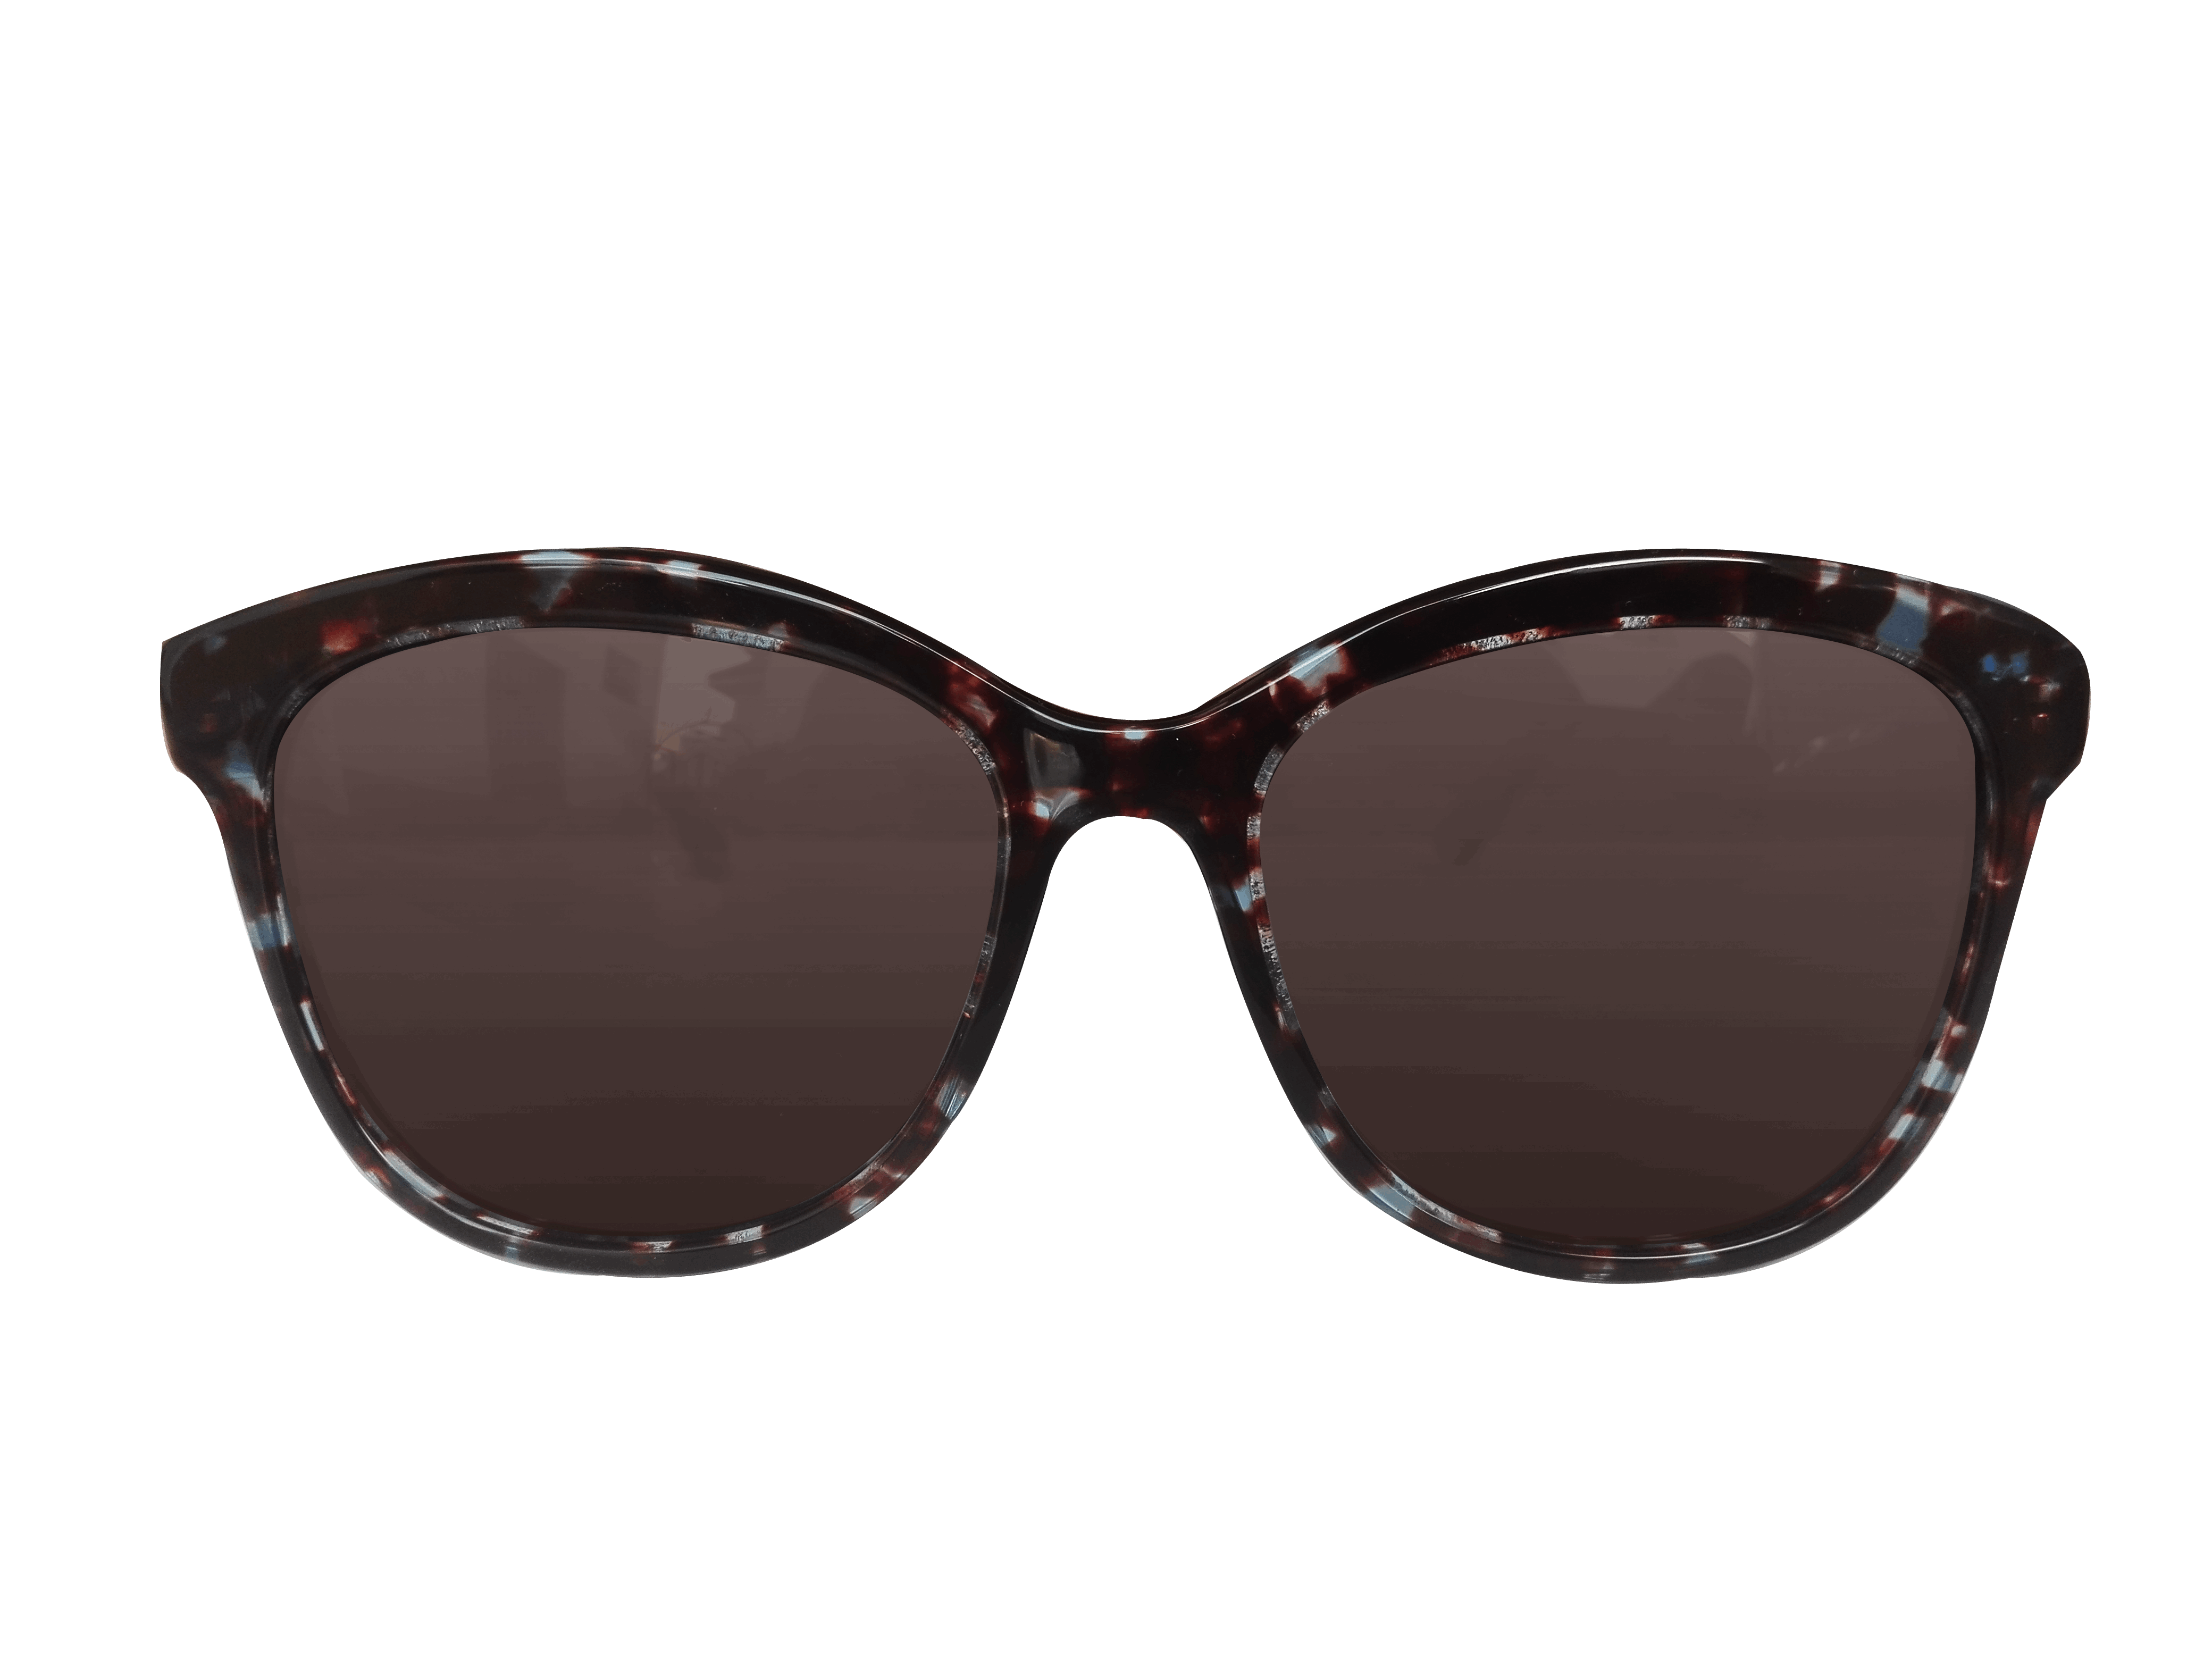 Eyeglass Sunglasses Specsavers Converse Hut Sunglass Prescription Clipart